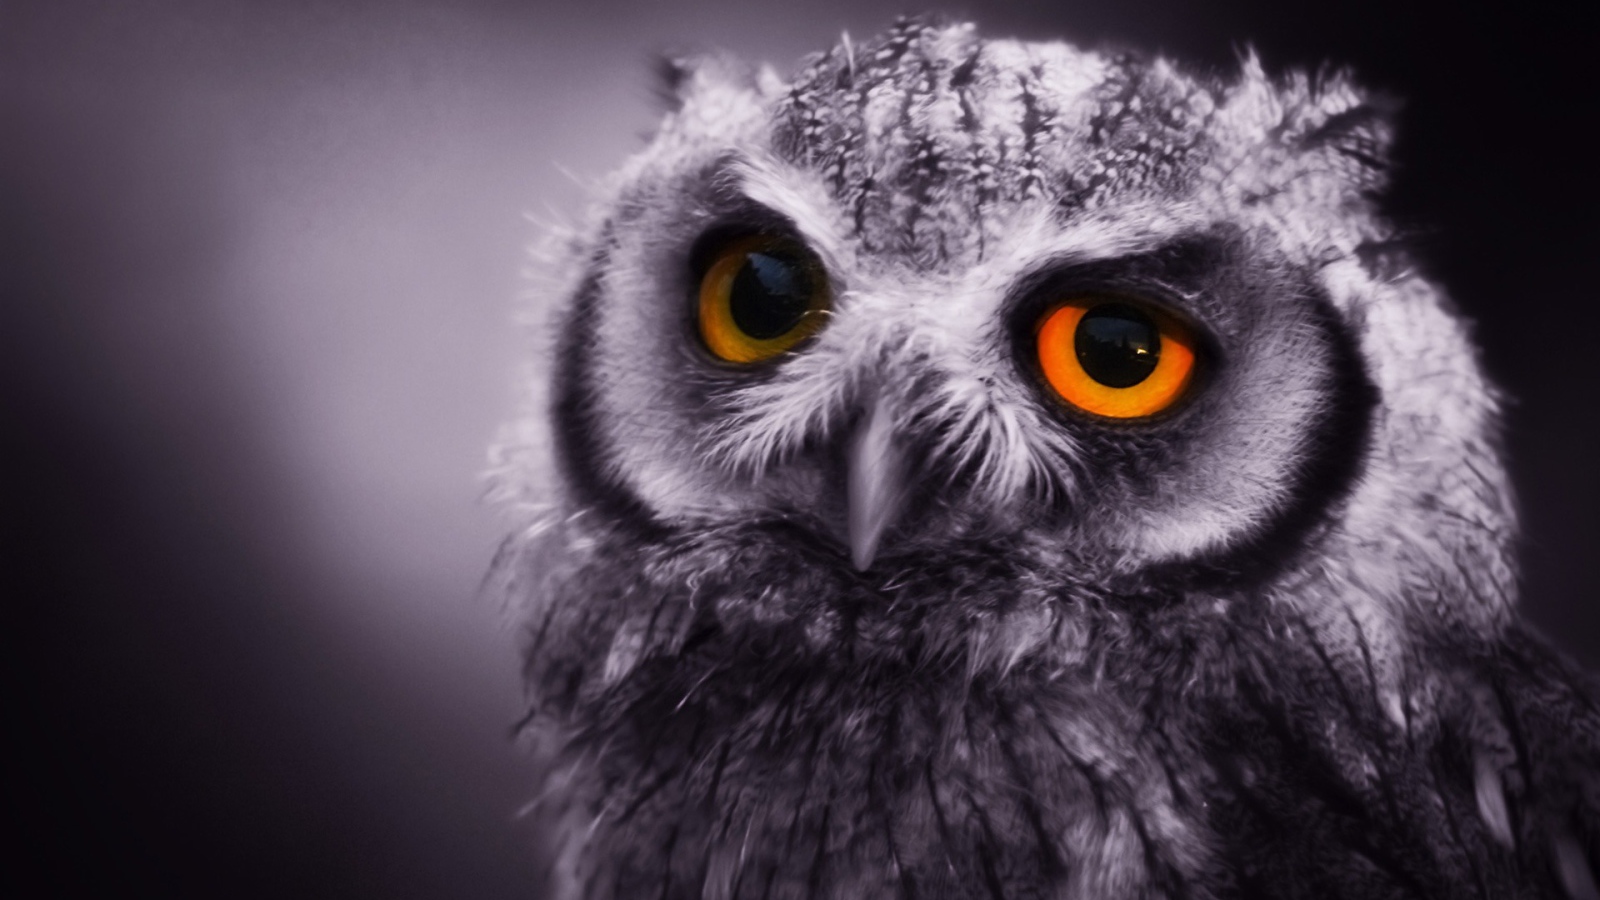 Night Owl